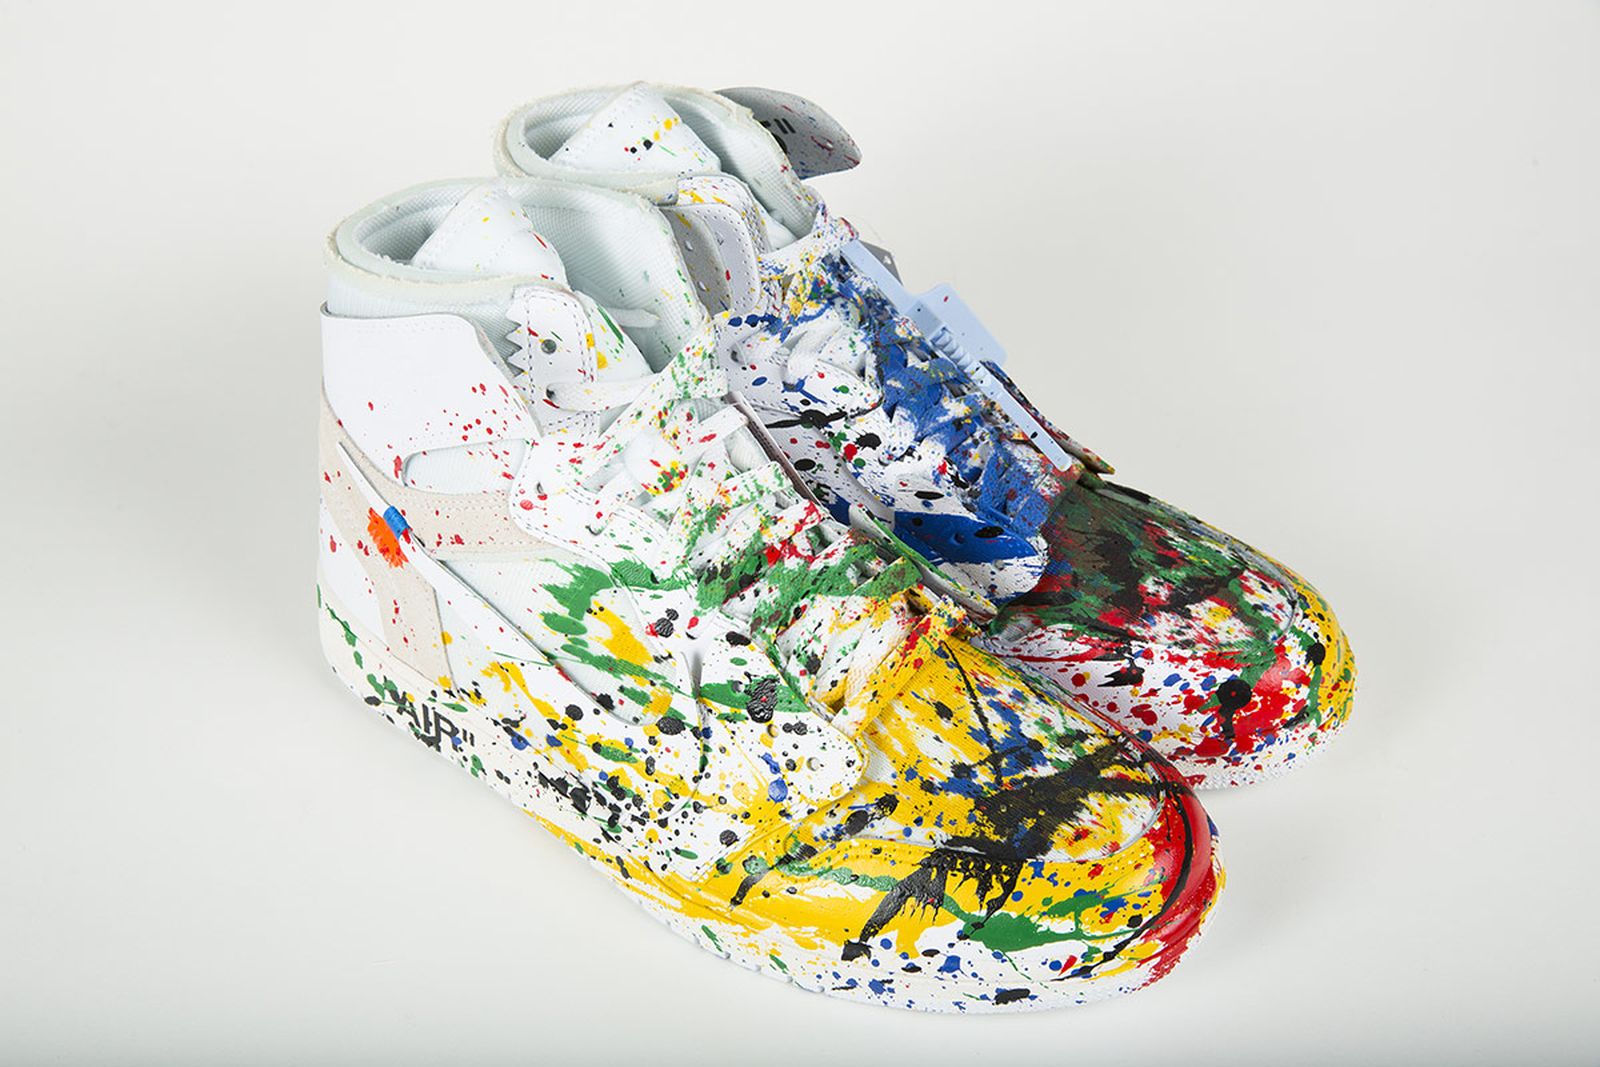 limited sneakers art charity auction Project Blitz dj am mr brainwash